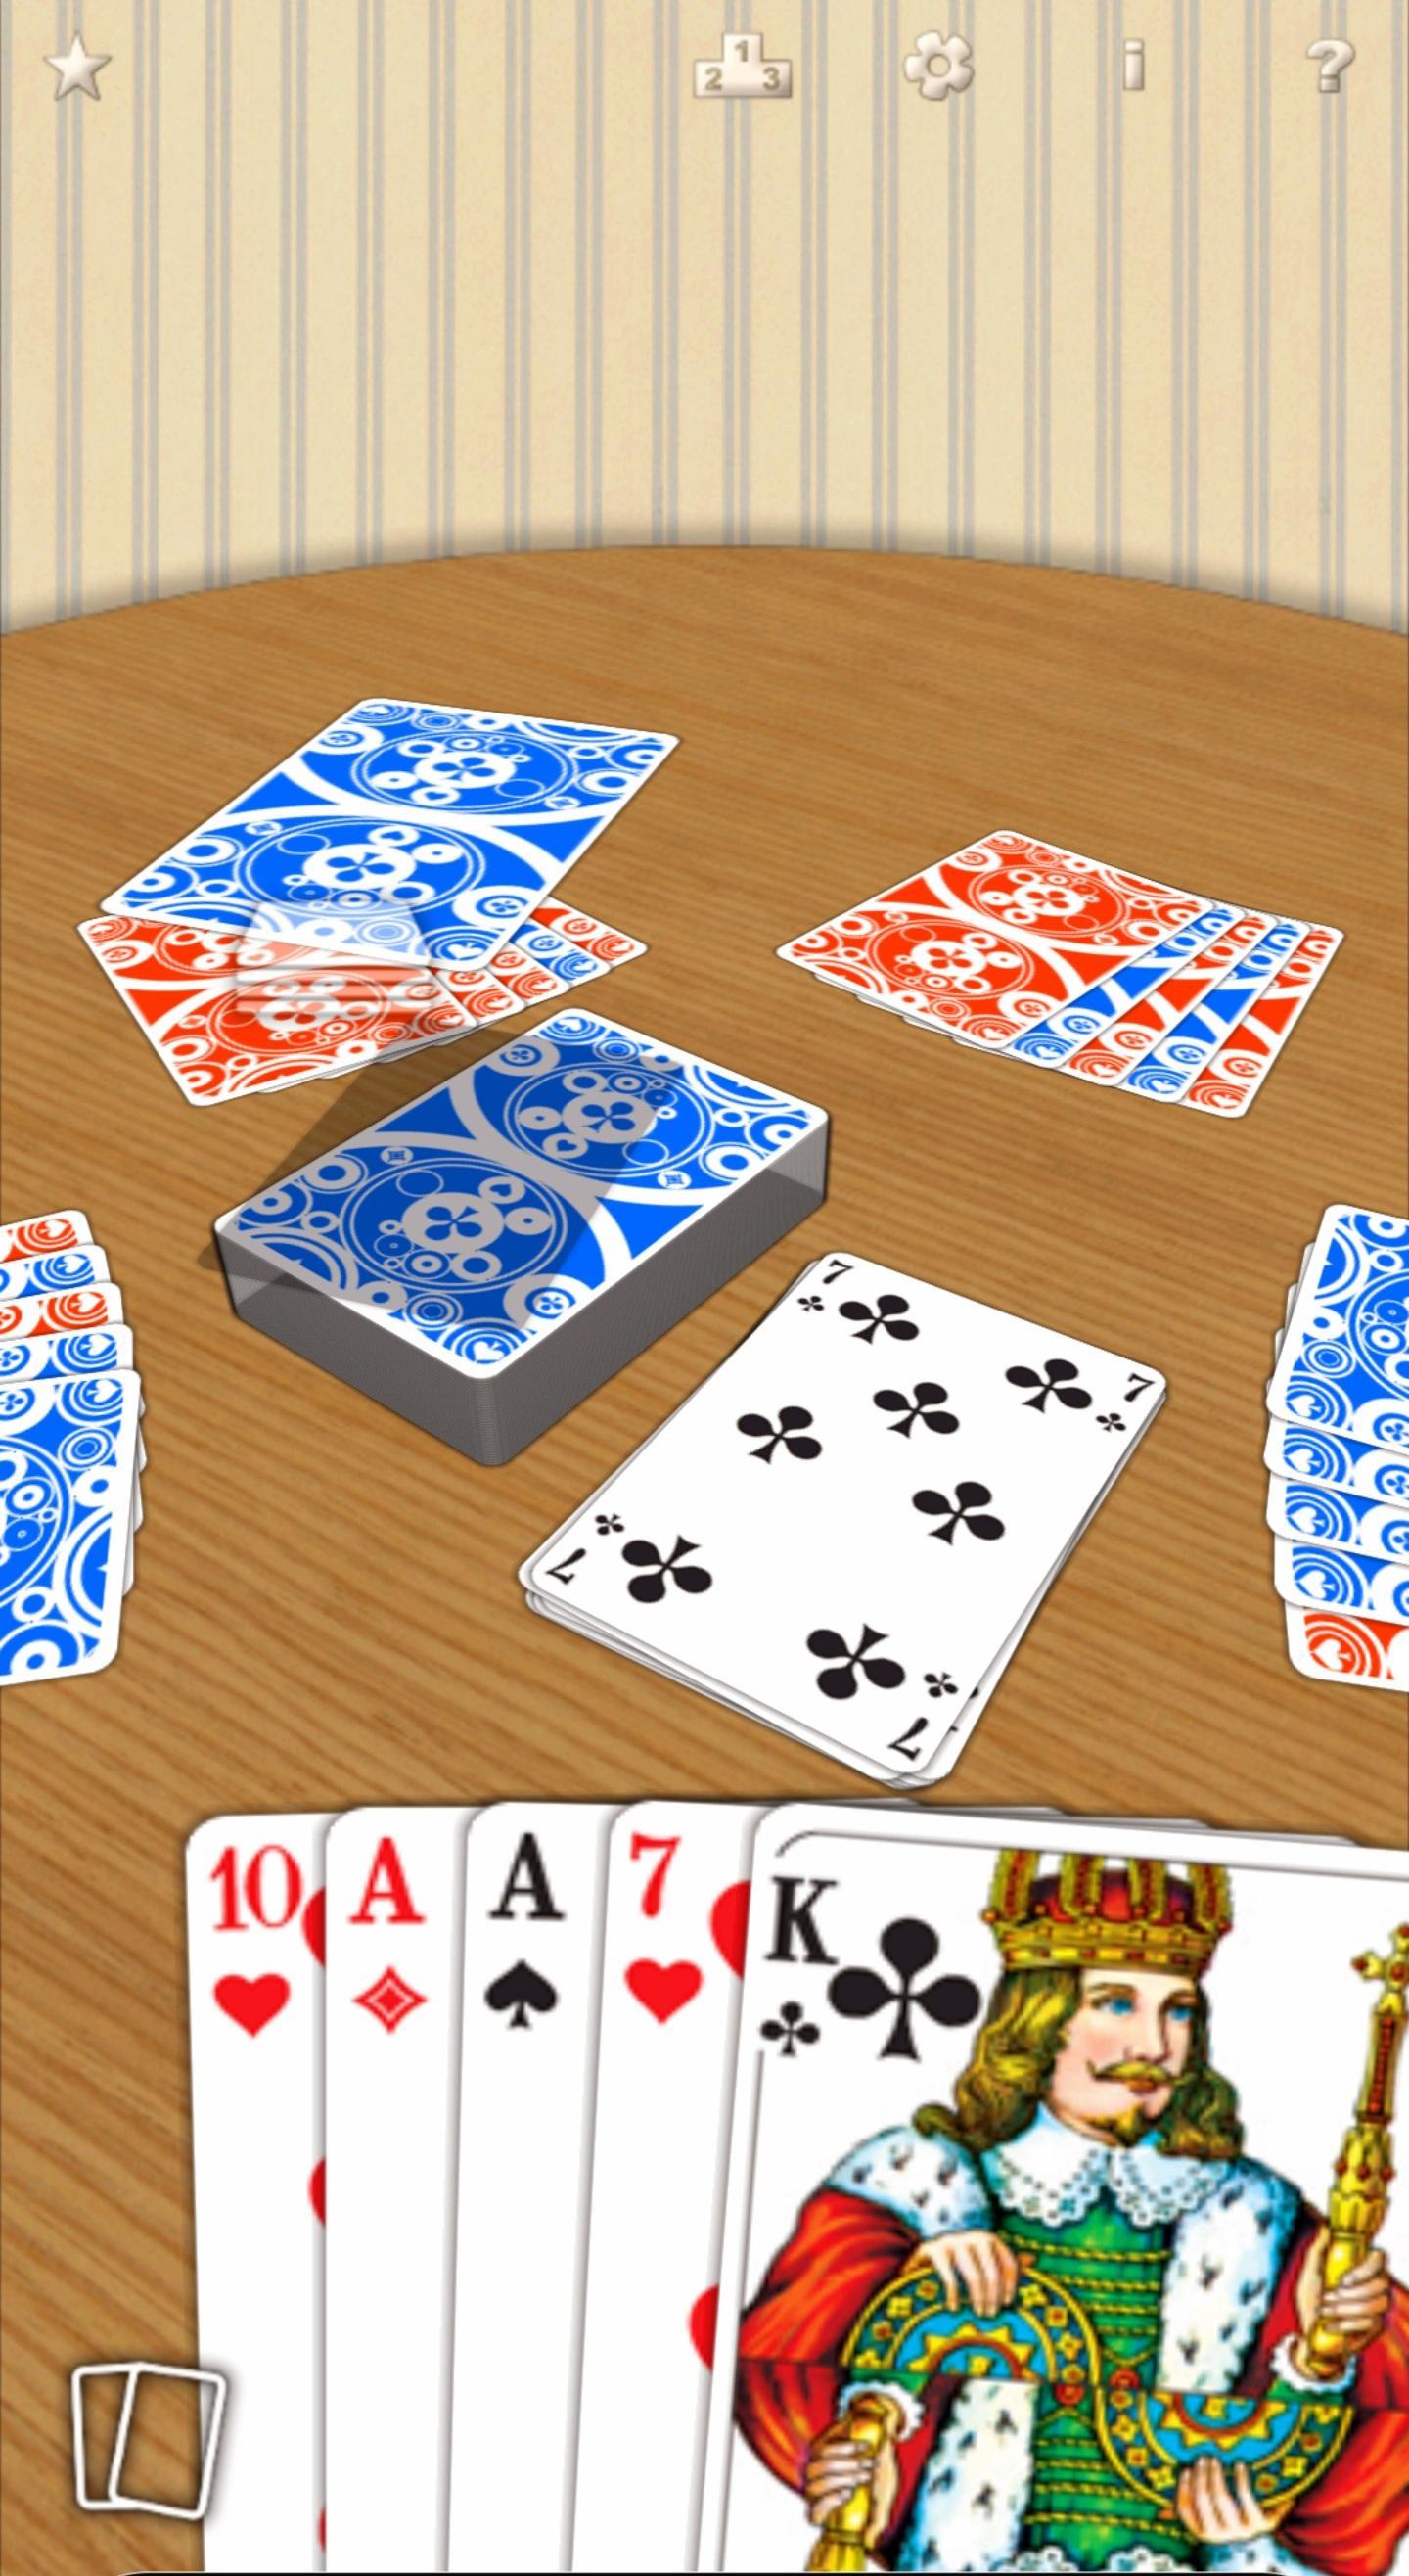 Crazy Eights free card game 1.6.96 Screenshot 6